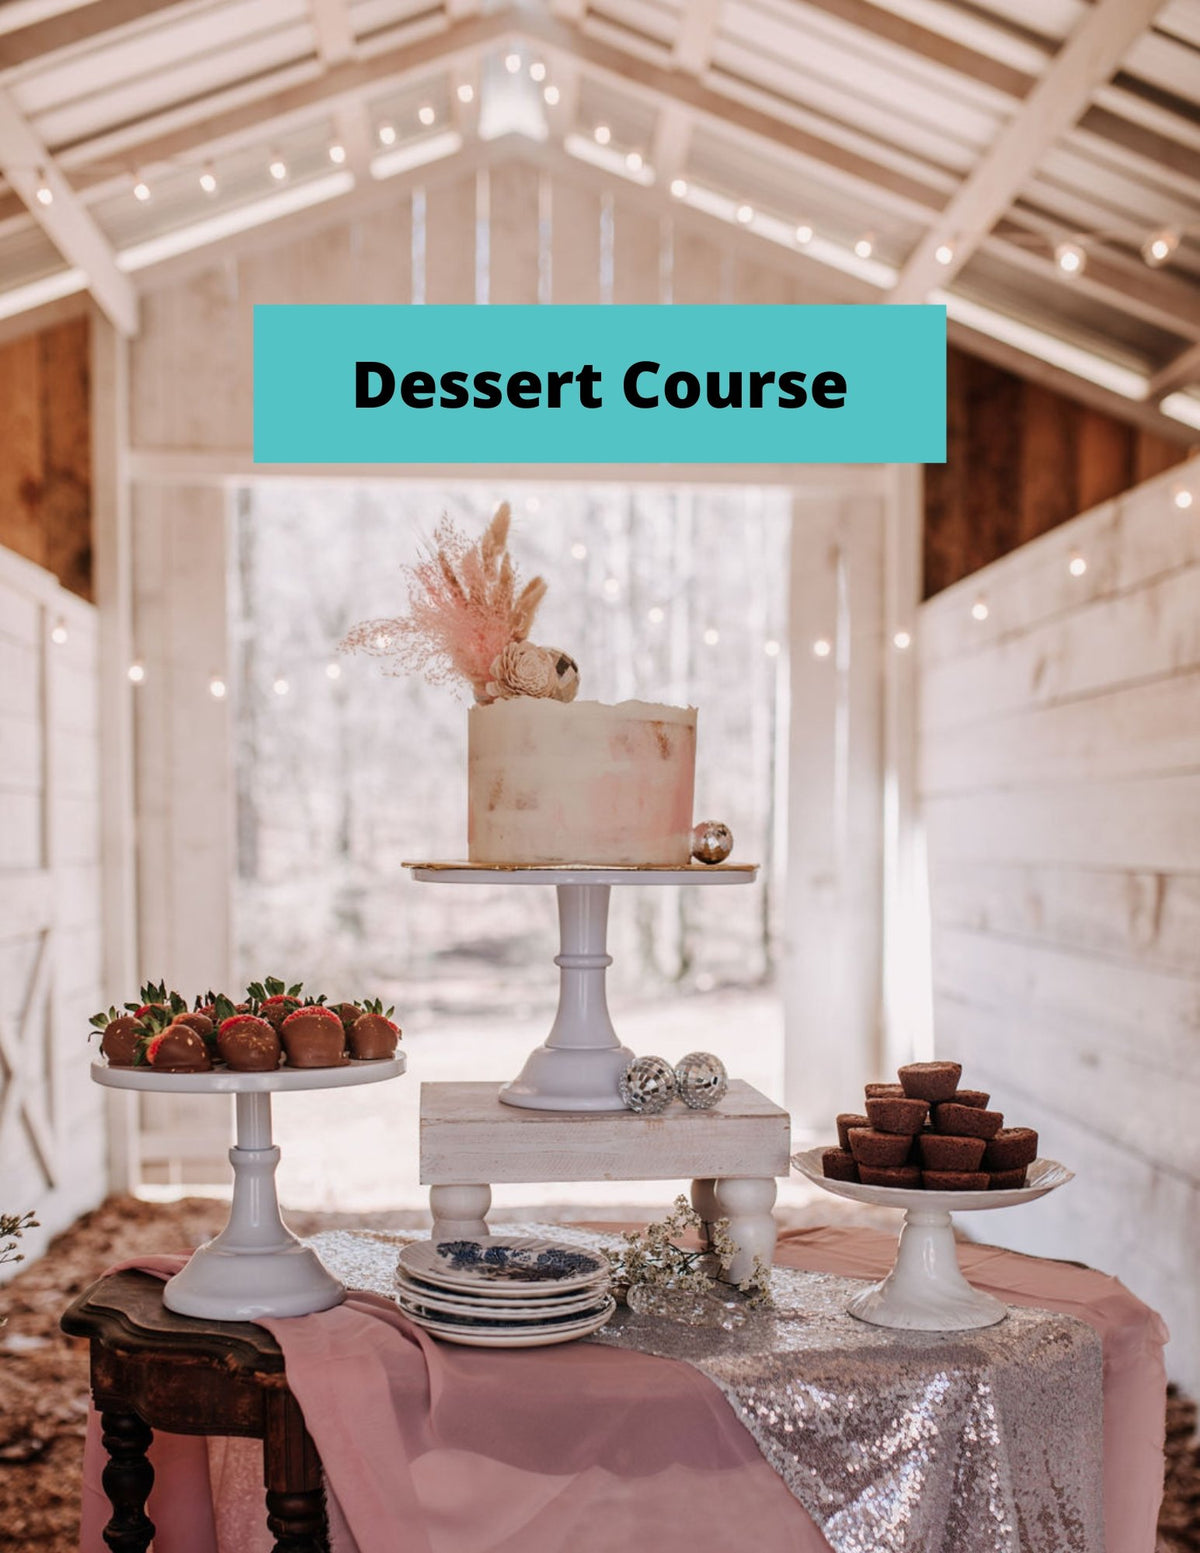 The Dessert Course